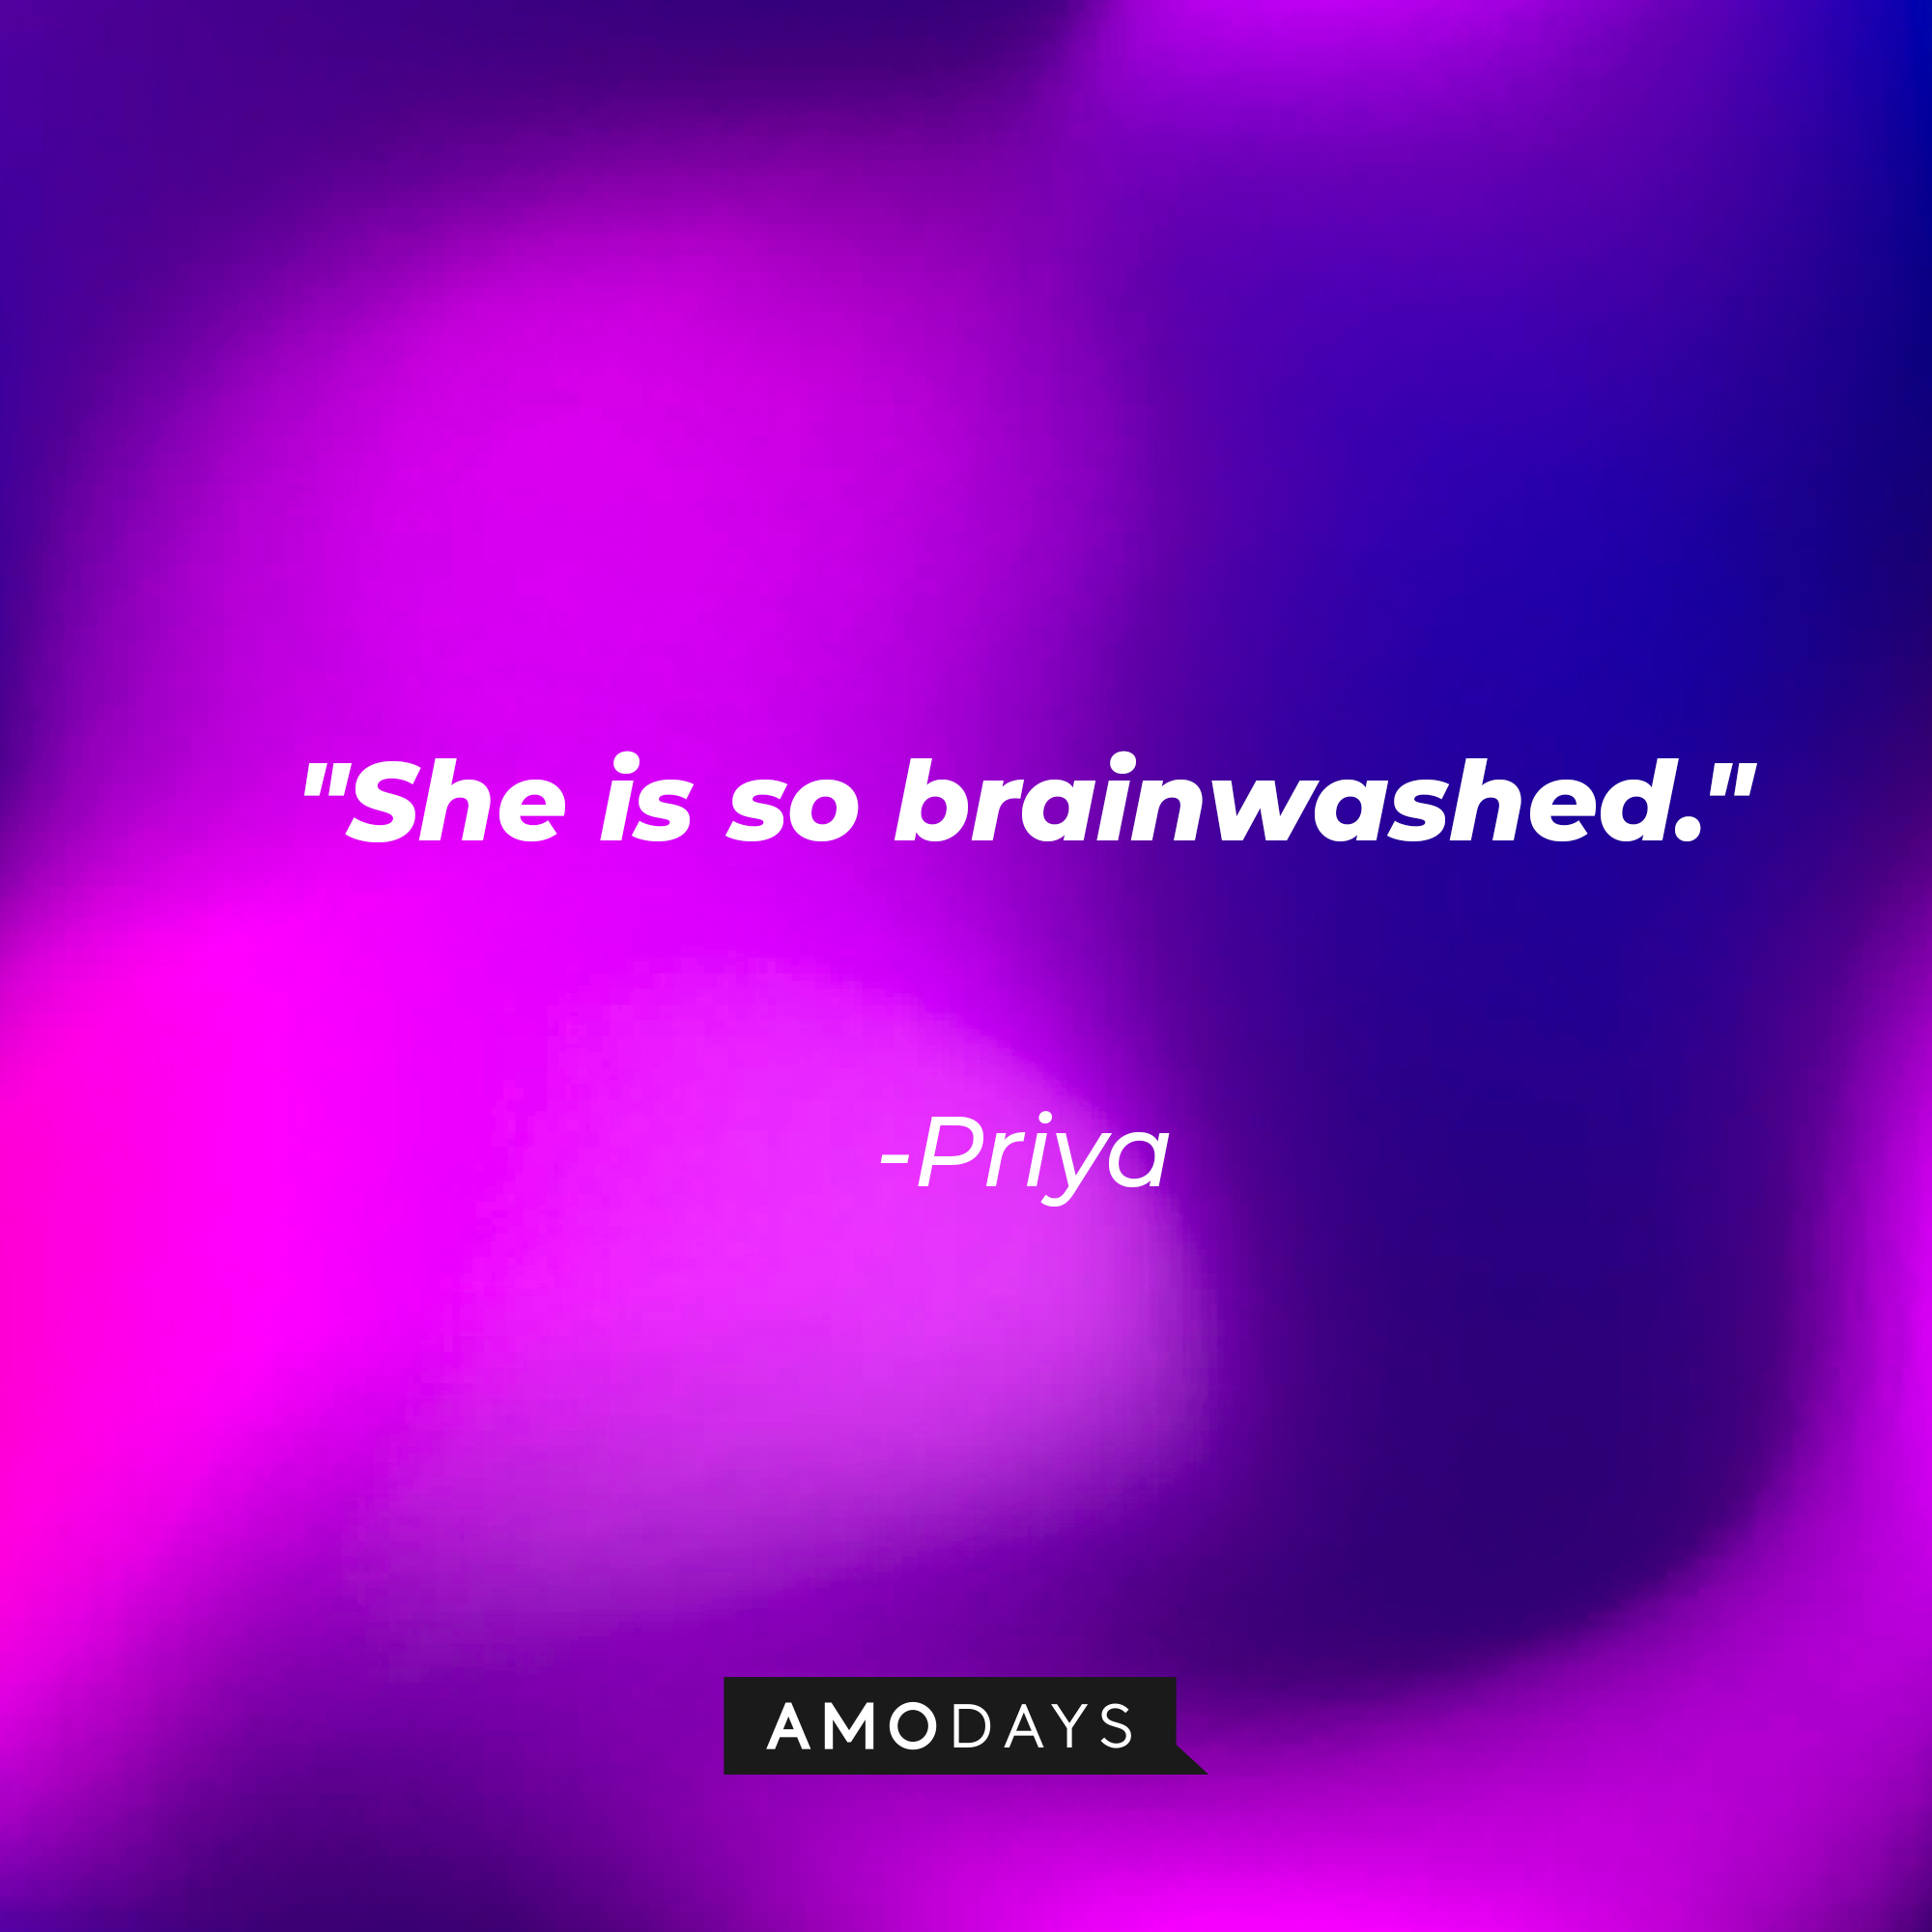 Priya's quote: "She is so brainwashed." | Source: AmoDays